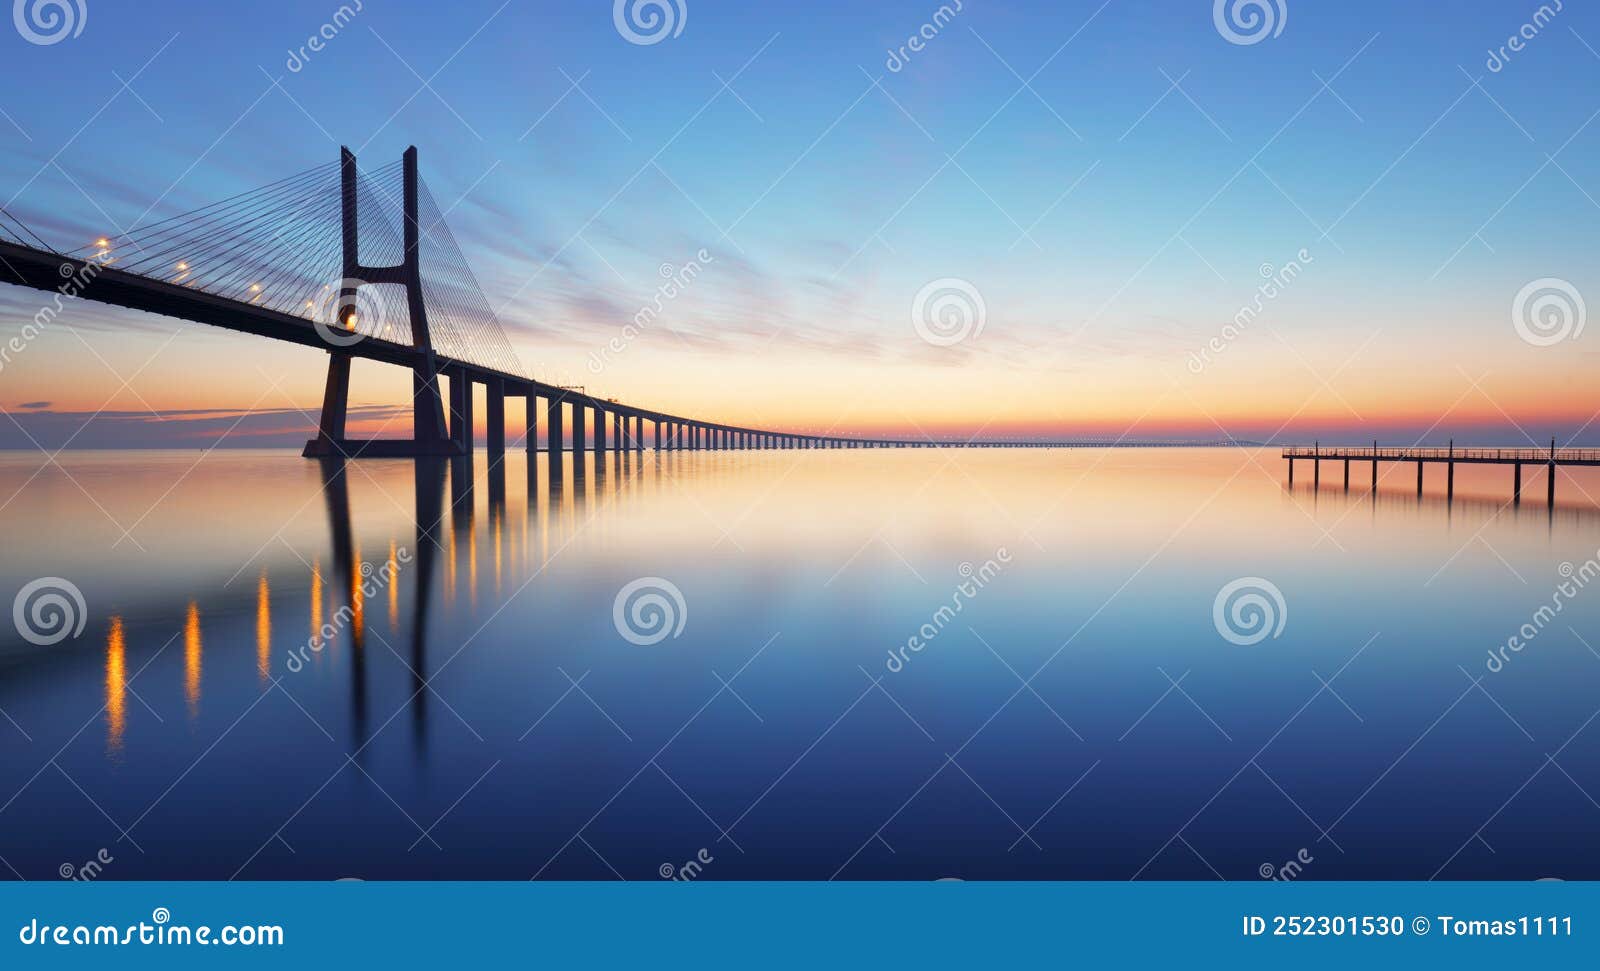 lisbon bridge - vasco da gama at sunrise, portugal